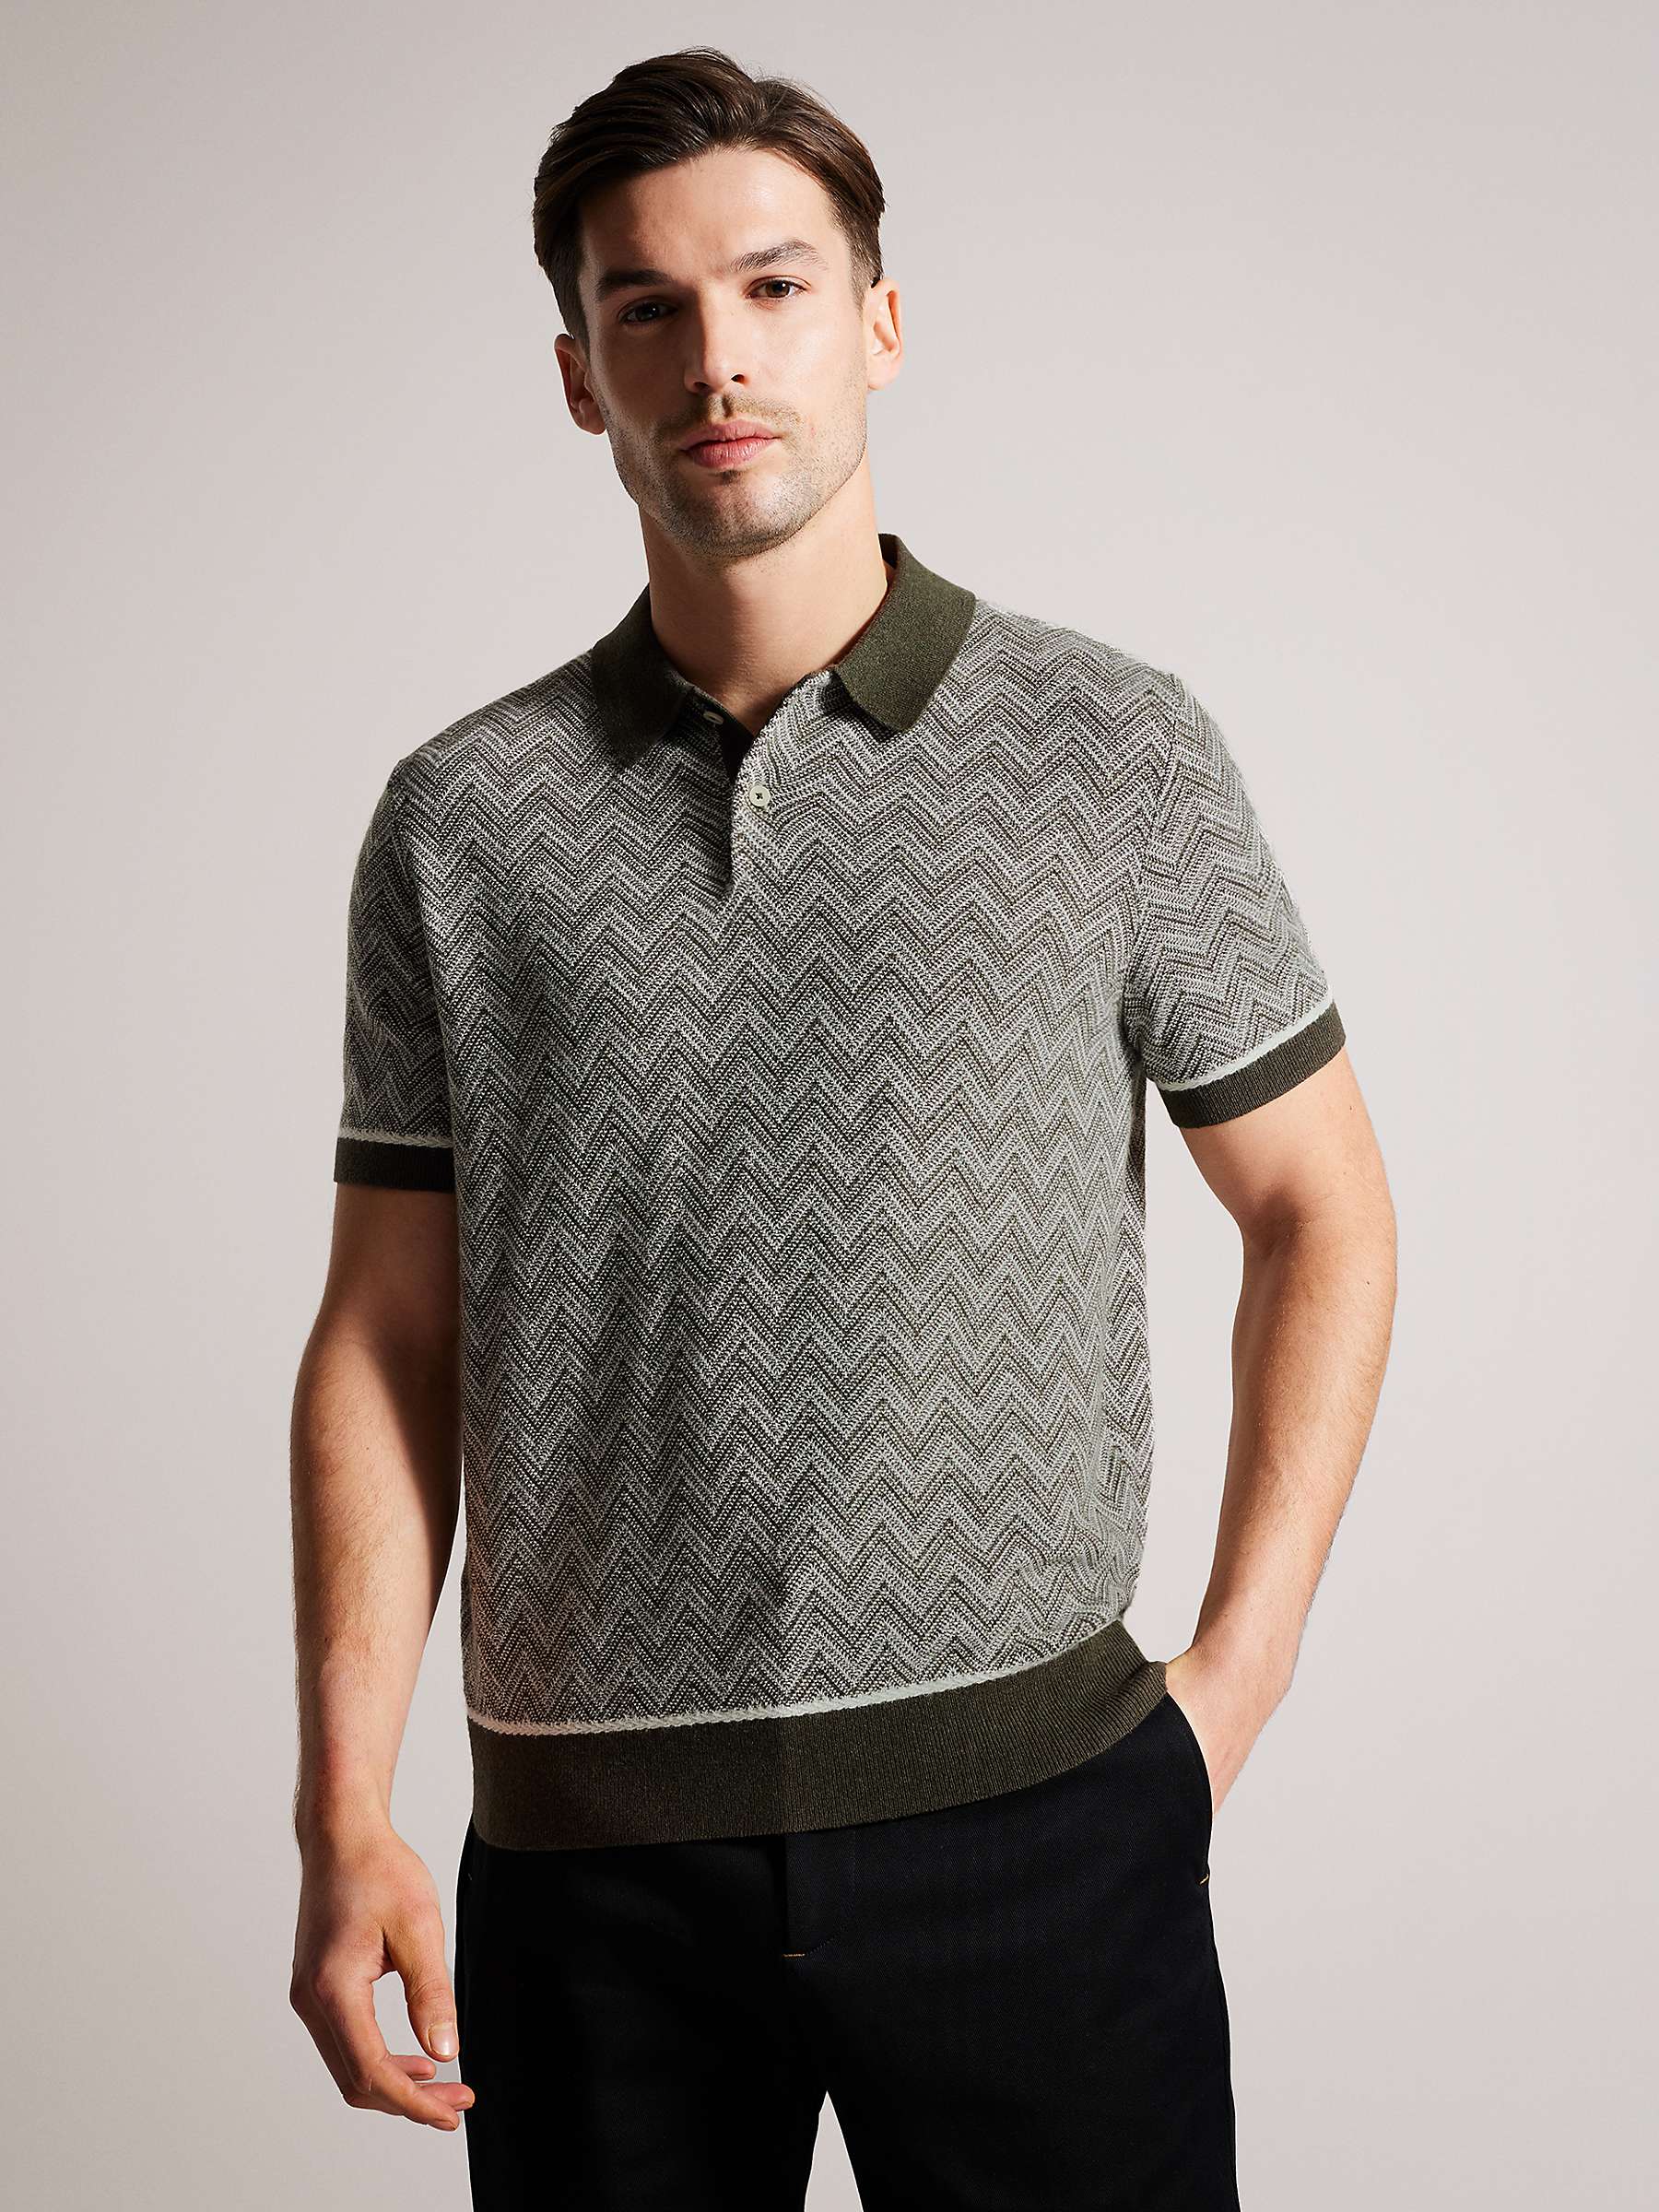 Ted Baker Waldun Knitted Polo Shirt, Dark Green at John Lewis & Partners